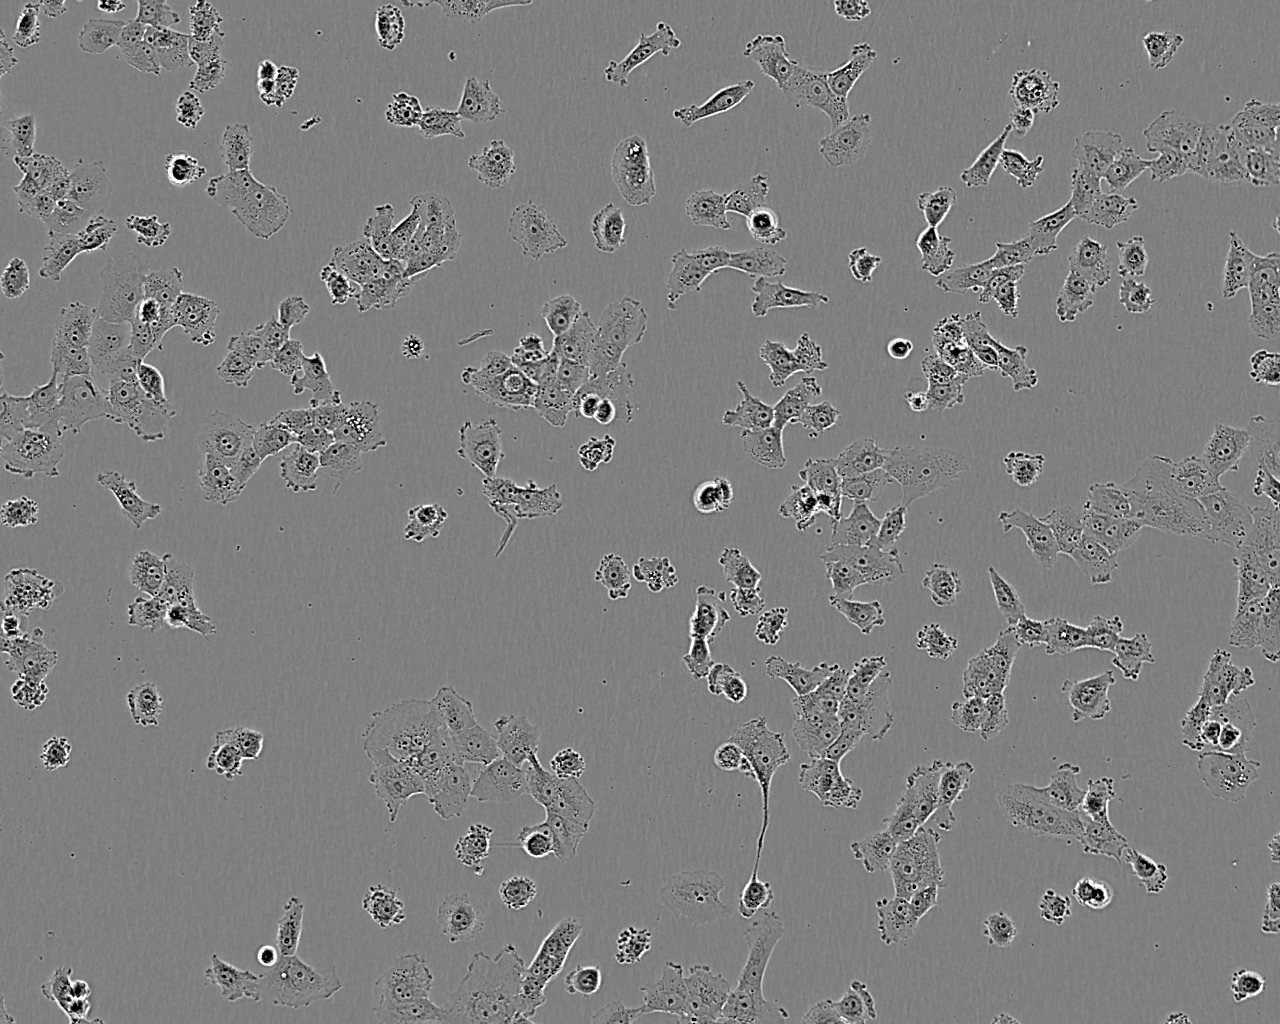 G-402 epithelioid cells人肾平滑肌瘤细胞系